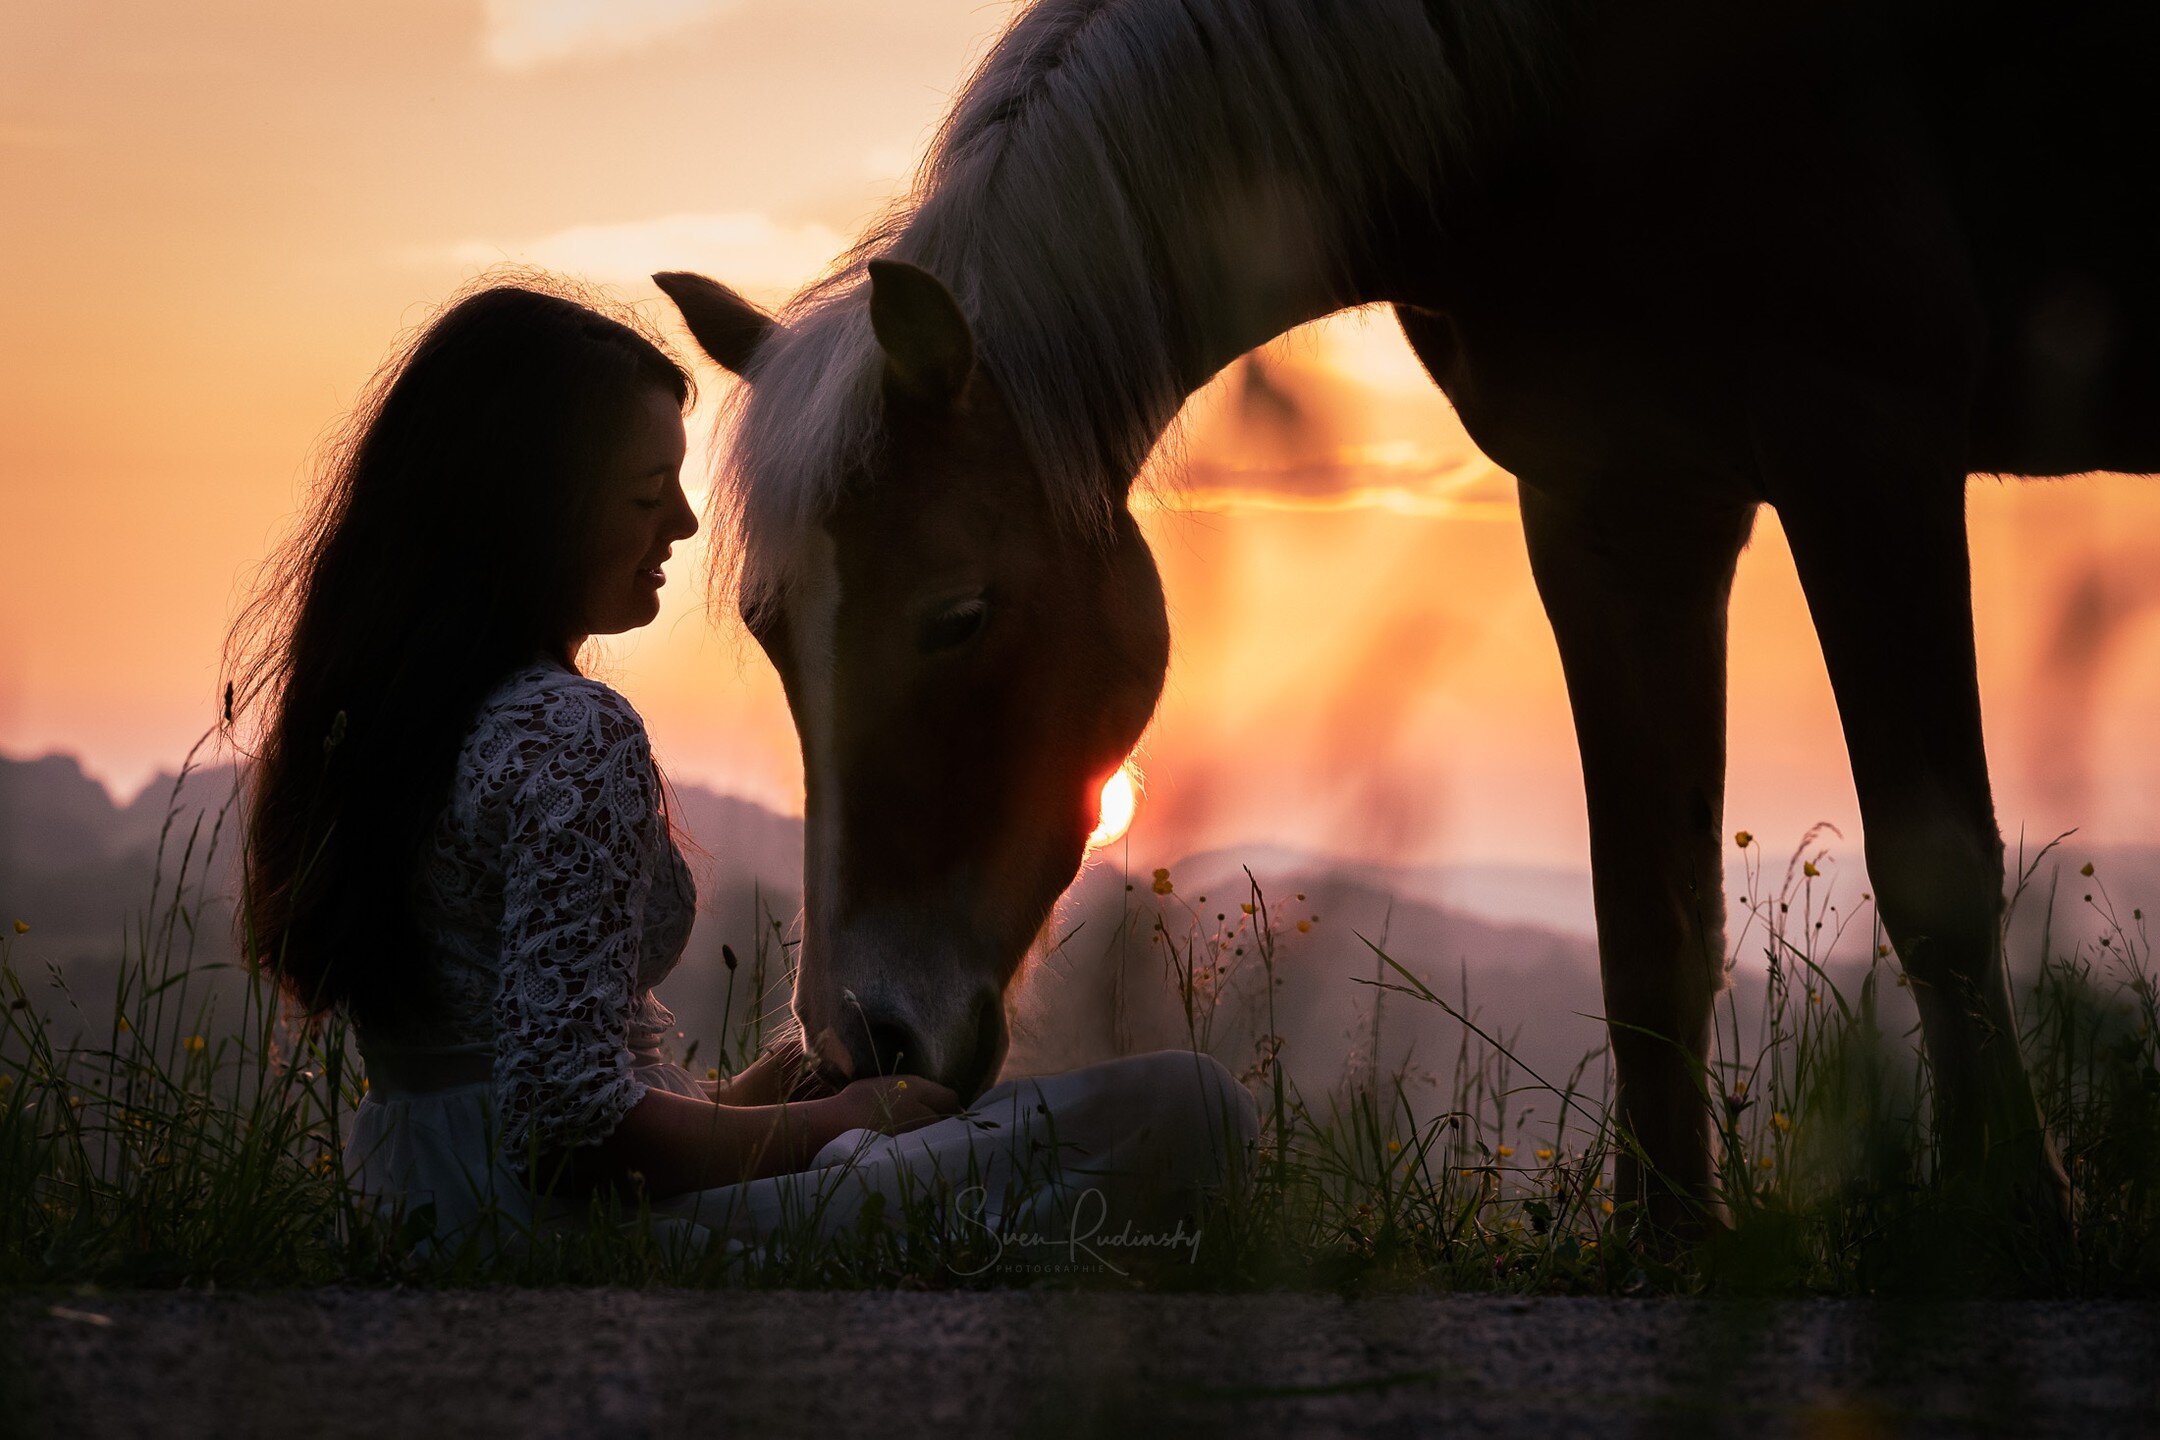 Pferdeshooting mit Lisa Marie Sch&uuml;&szlig;ler @1girl.and.2cows und Haflinger Mandy 🐴 bei Sonnenaufgang 🌞

#pferdeshooting #pferd #sonnenaufgangmitpferd #sonnenaufgang #haflinger #pferdem&auml;dchen #gl&uuml;cksmoment #horse #hobbyfotograf #foto